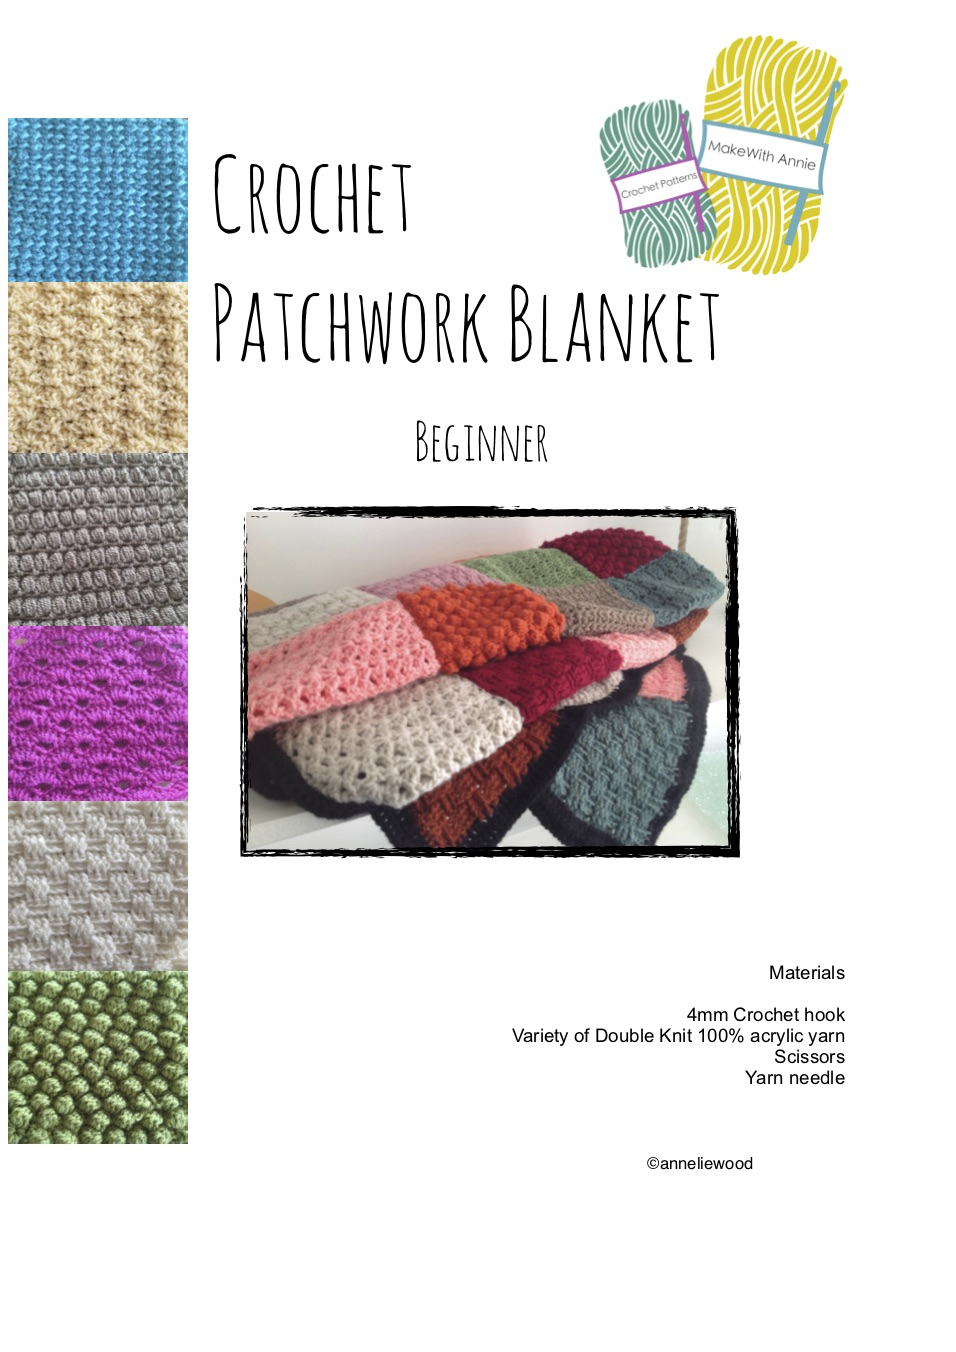 4Mm Crochet Hook Patterns Crochet Patchwork Blanket